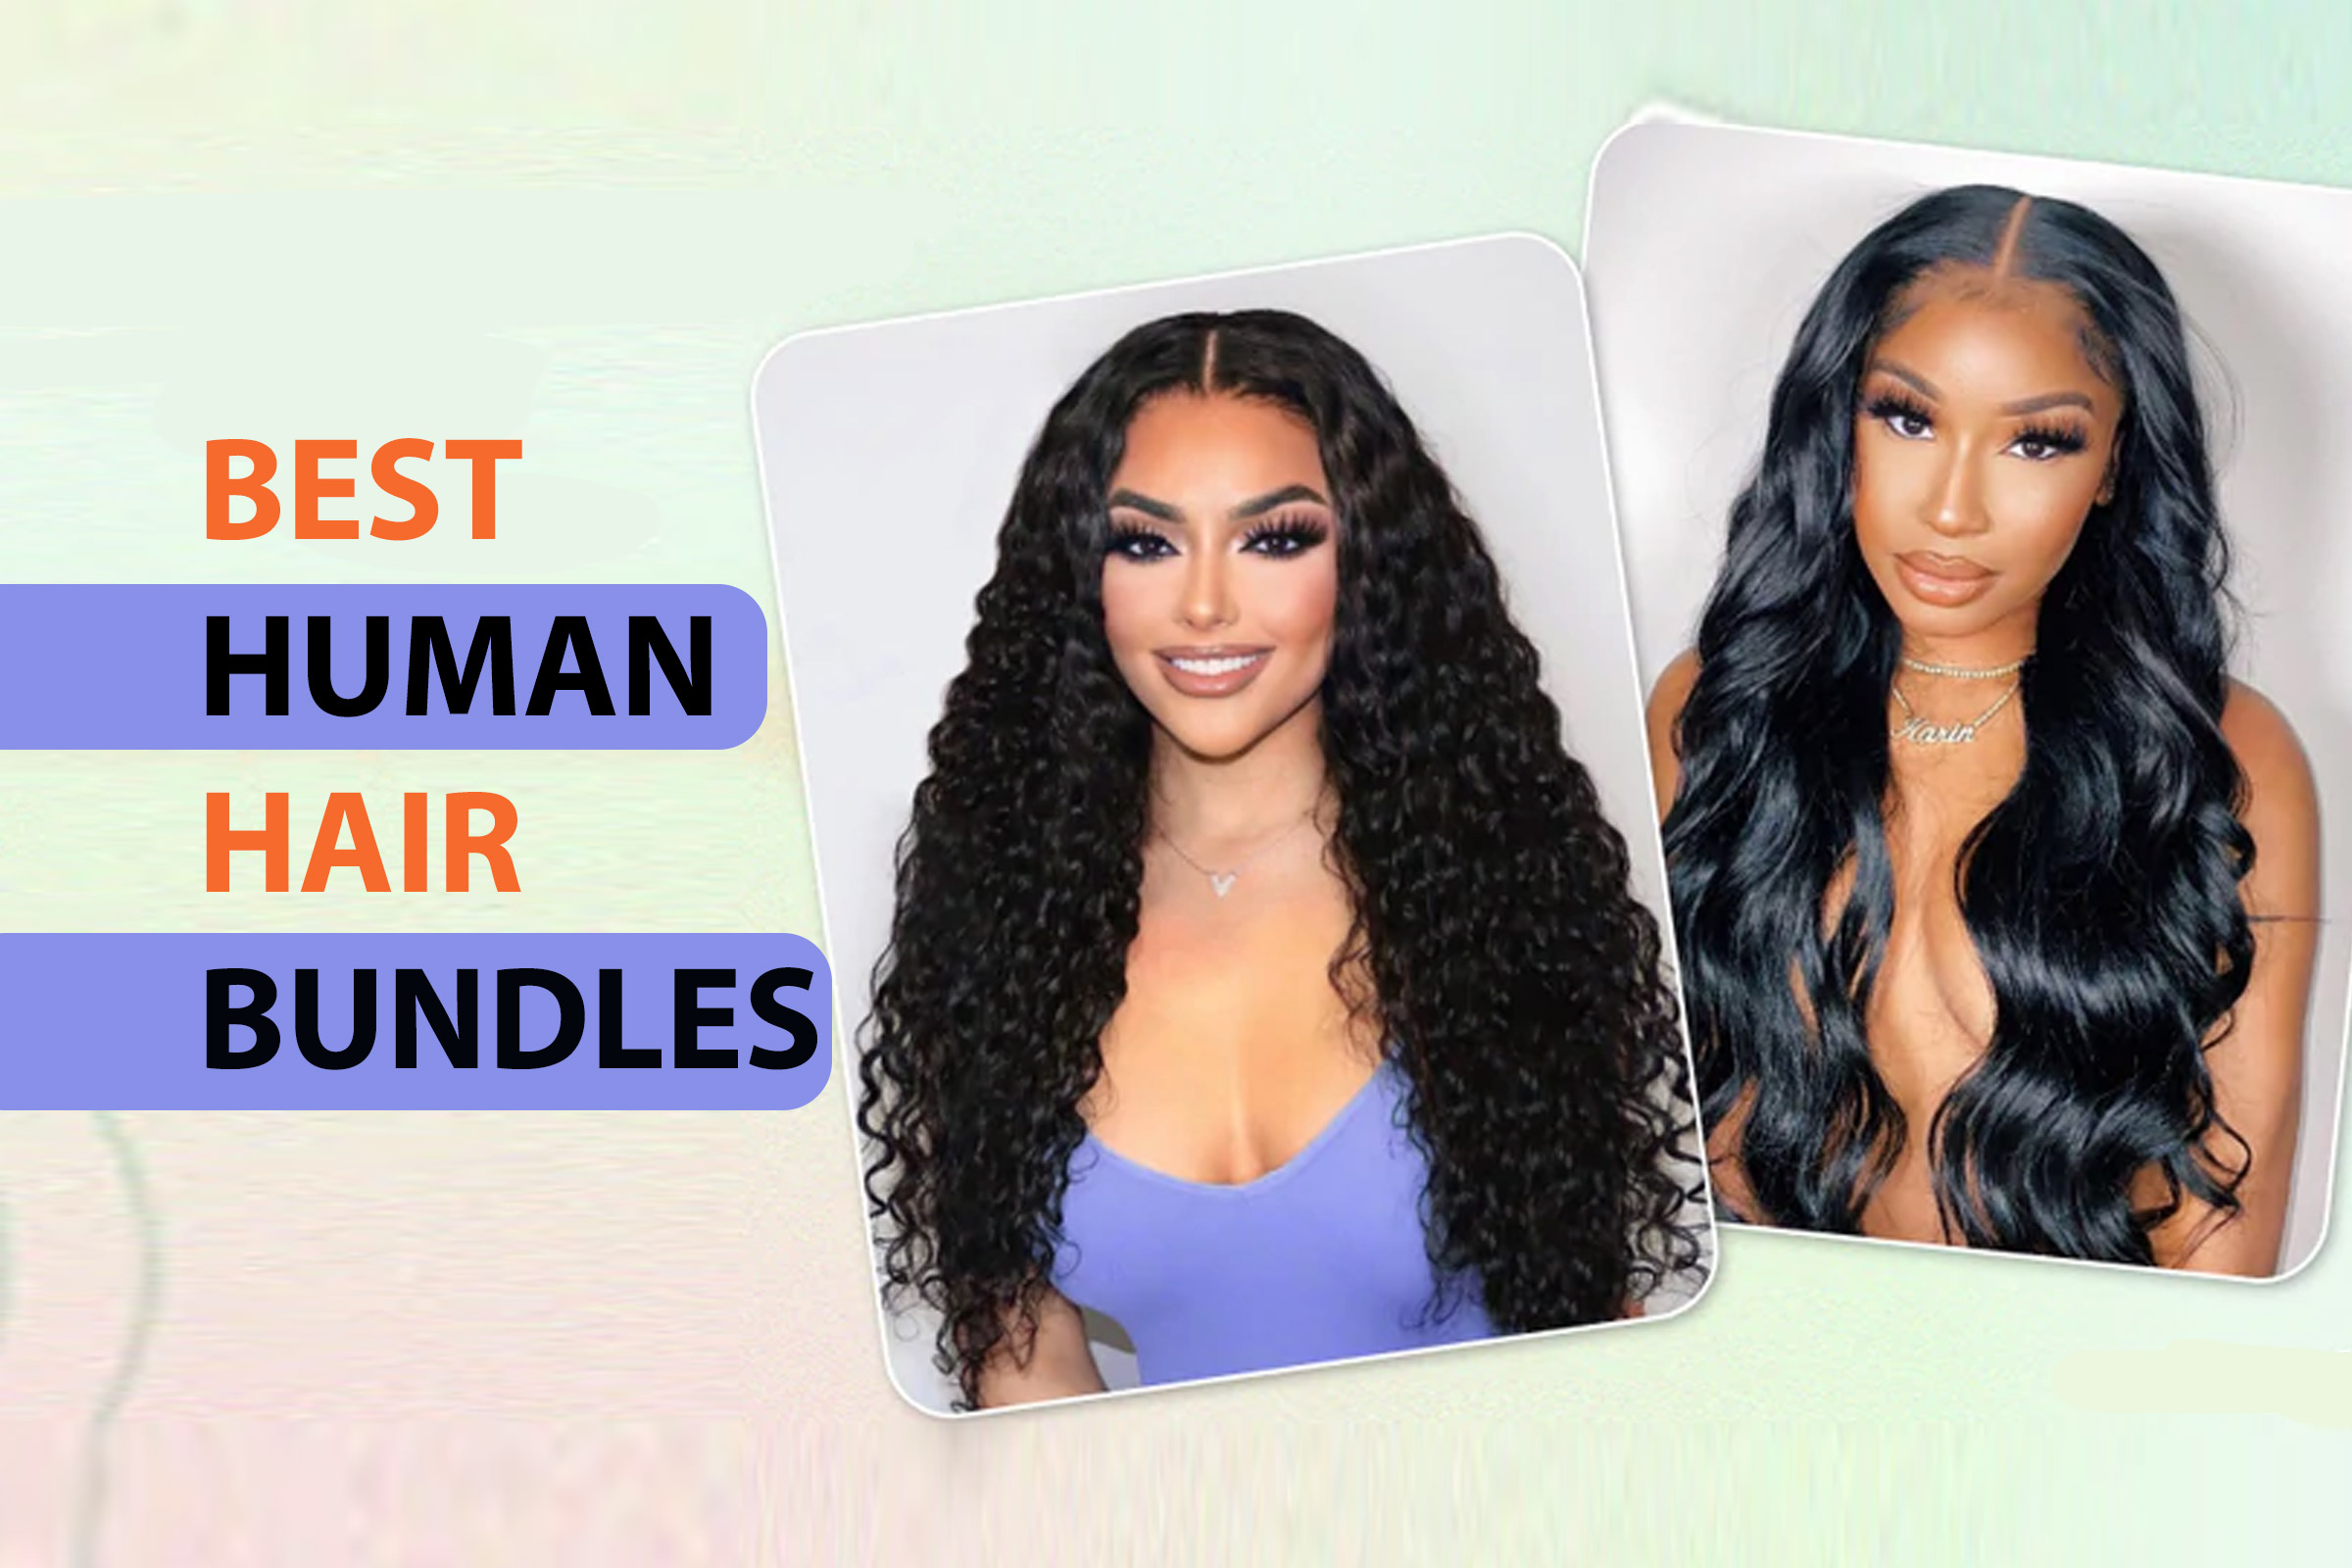 klaiyi hair Review: -Best Human Hair Bundles